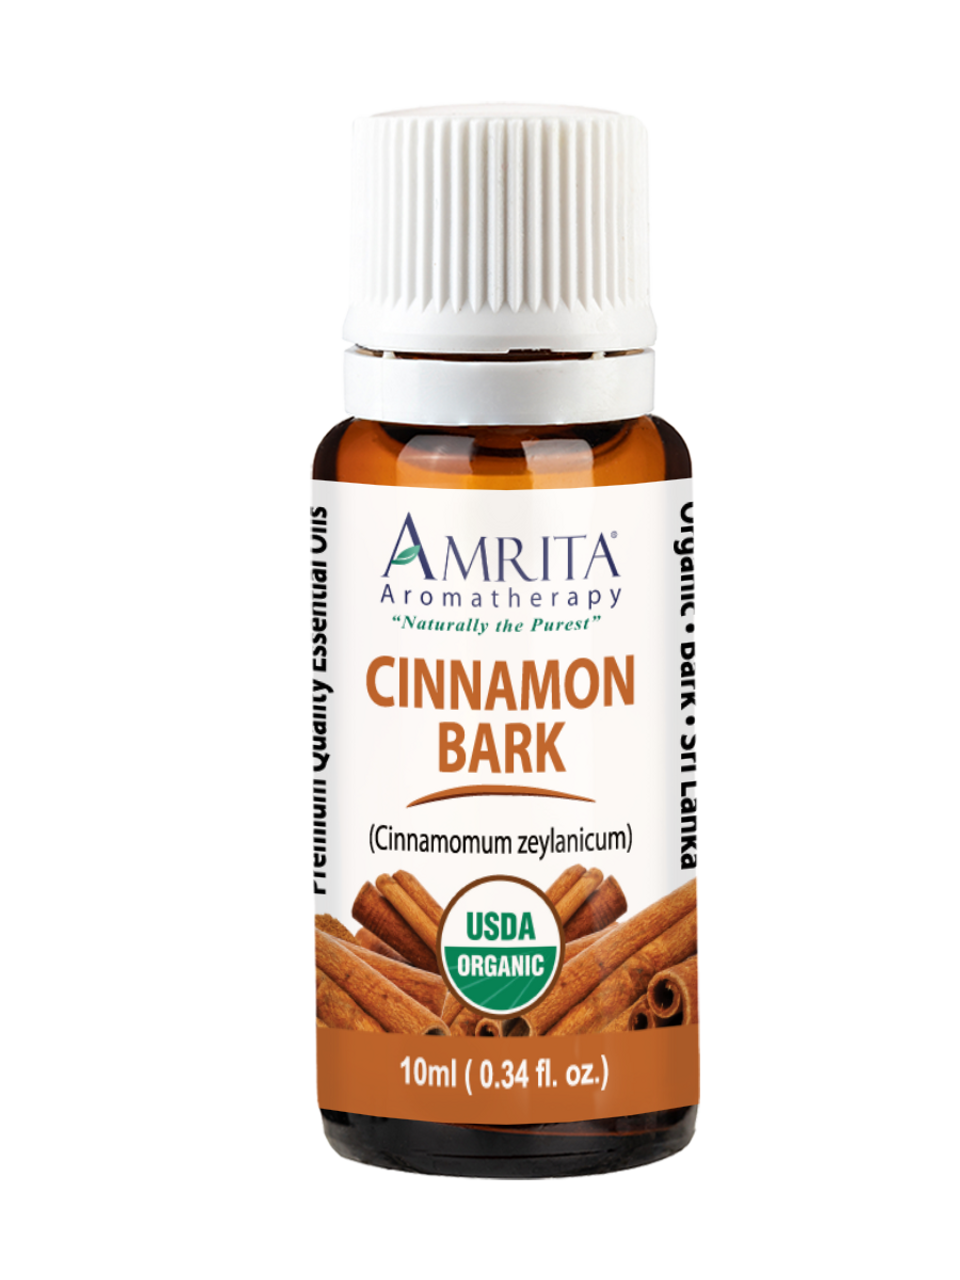 Cinnamon Bark Organic Essential Oil